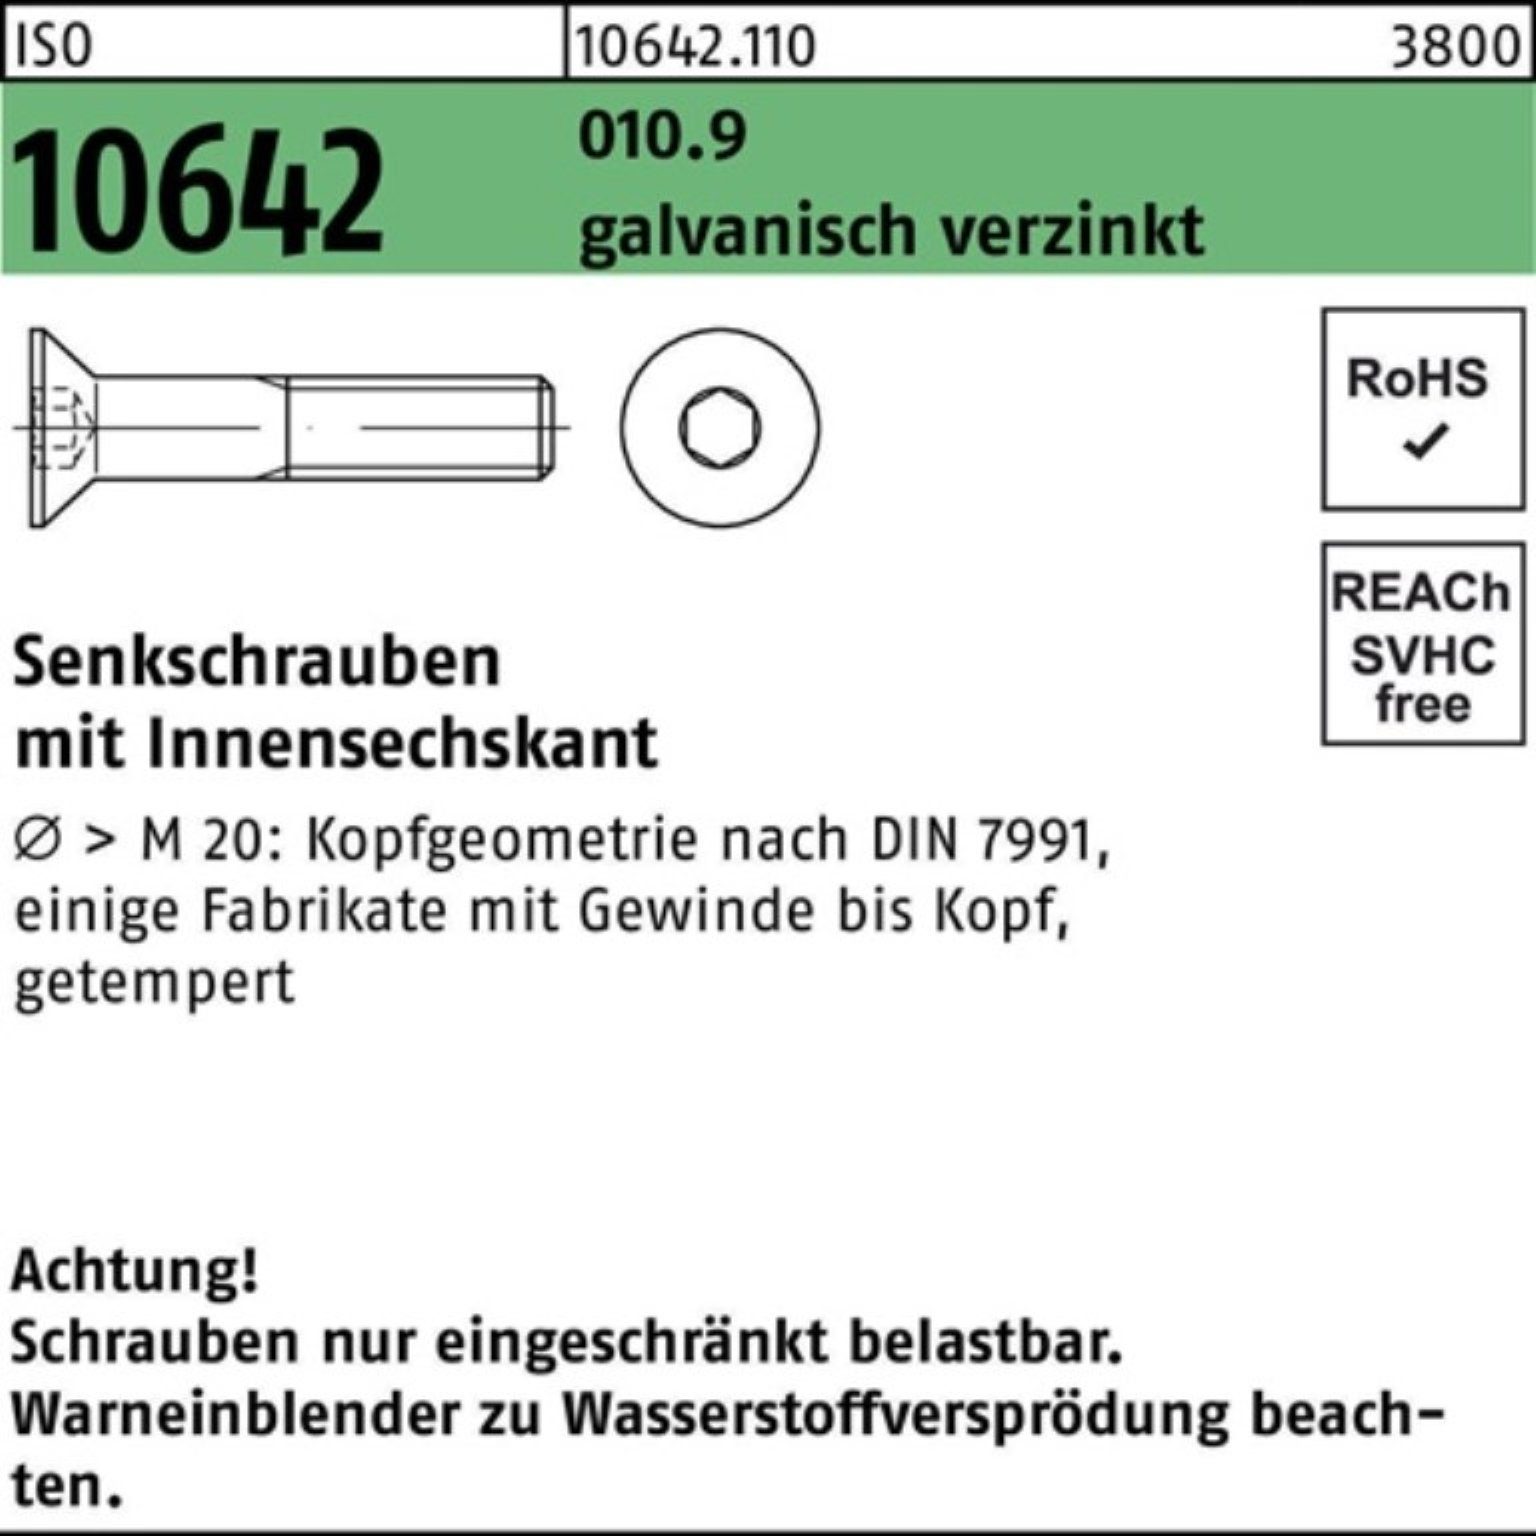 ISO M10x Senkschraube Senkschraube 2 10642 010.9 Pack 16 galv.verz. Reyher Innen-6kt 200er